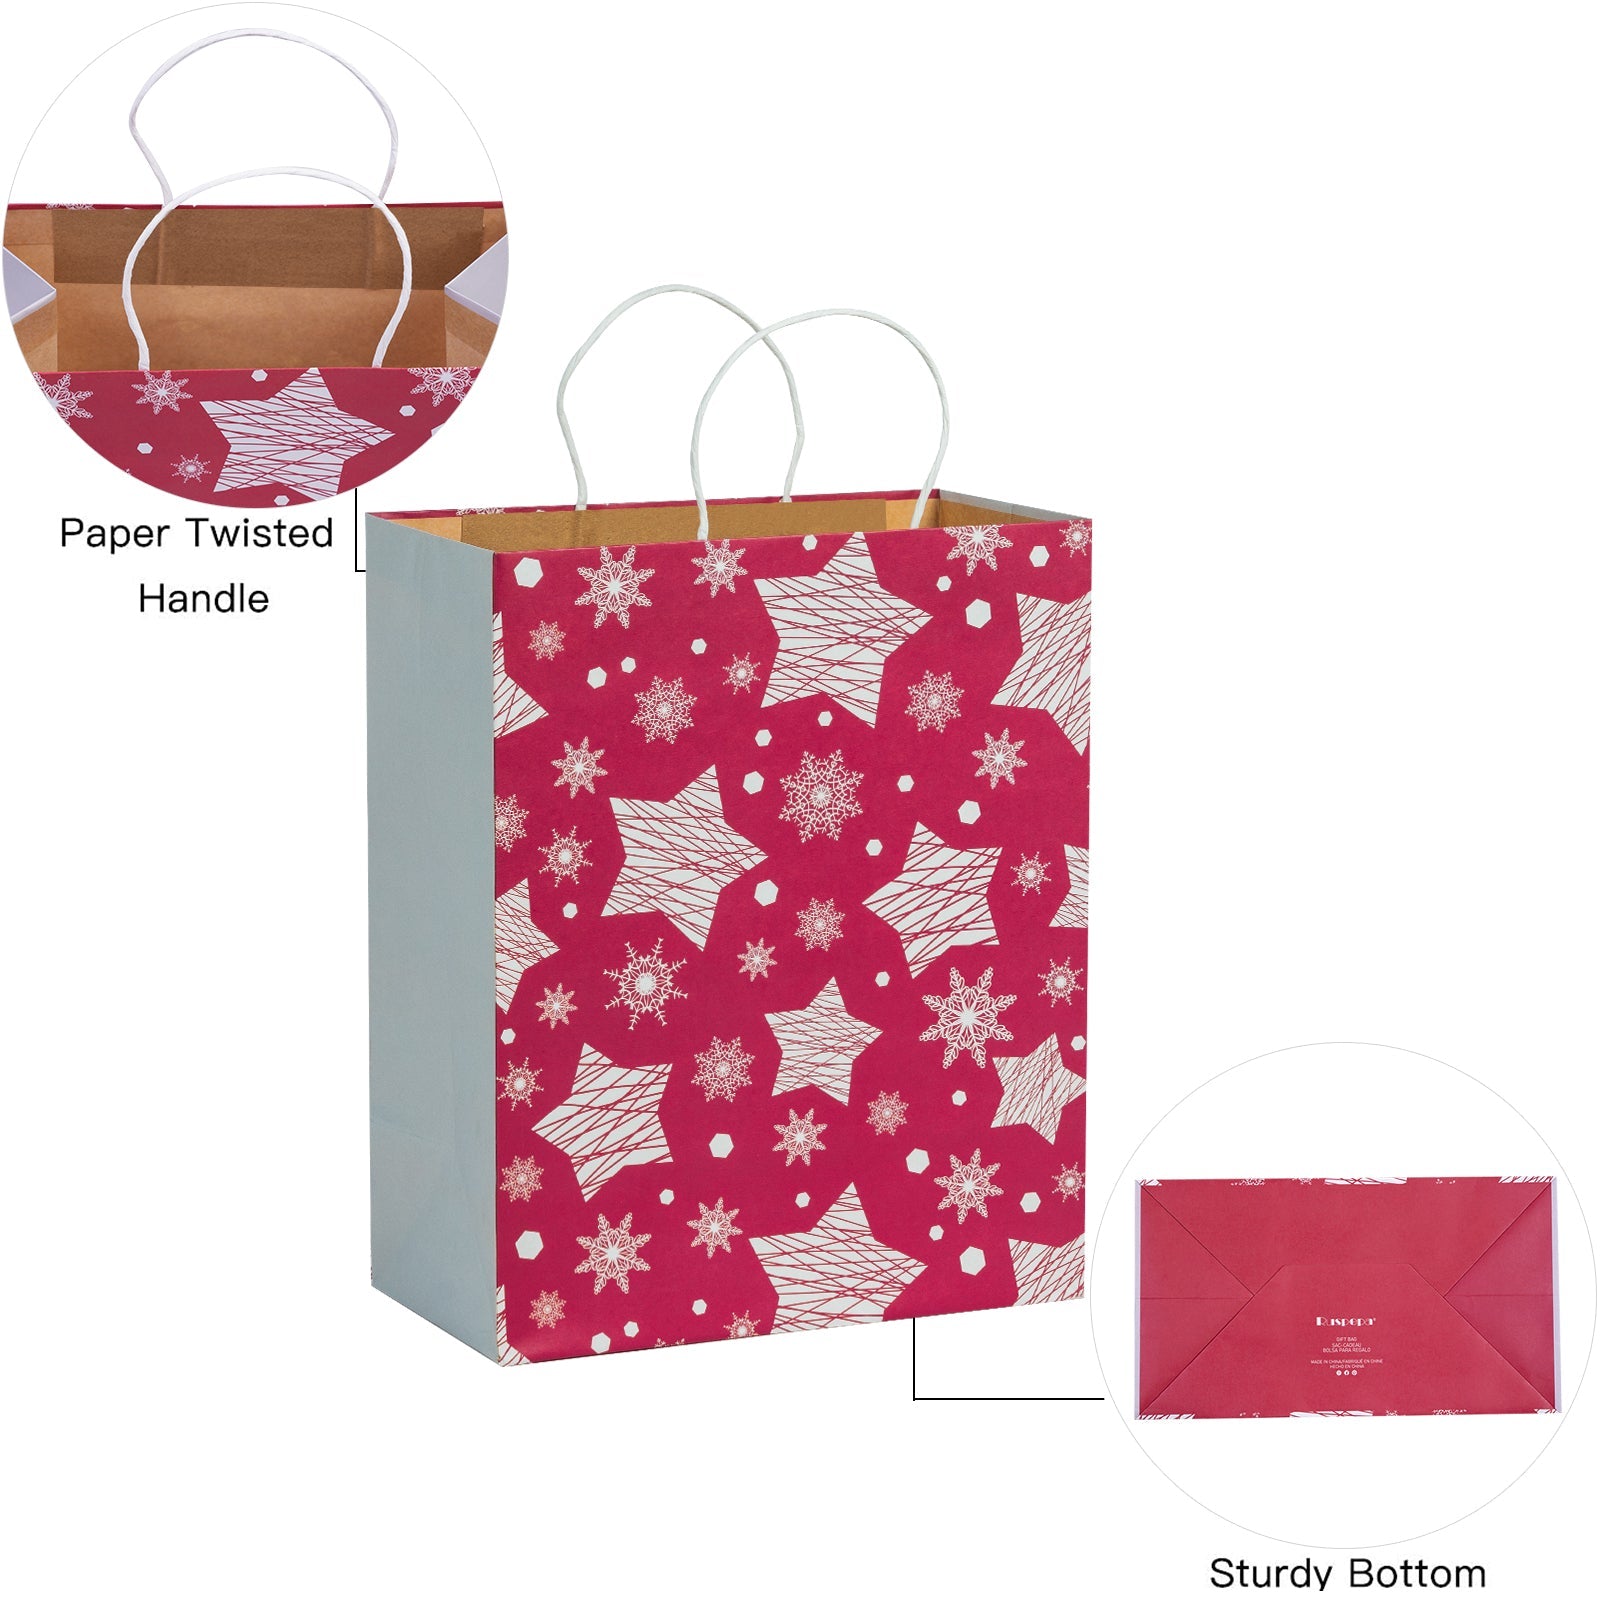 Assort Medium & Large Christmas Gift Bags - Snowflakes/ Cabin/ Stars/ Deer - 8 Pack